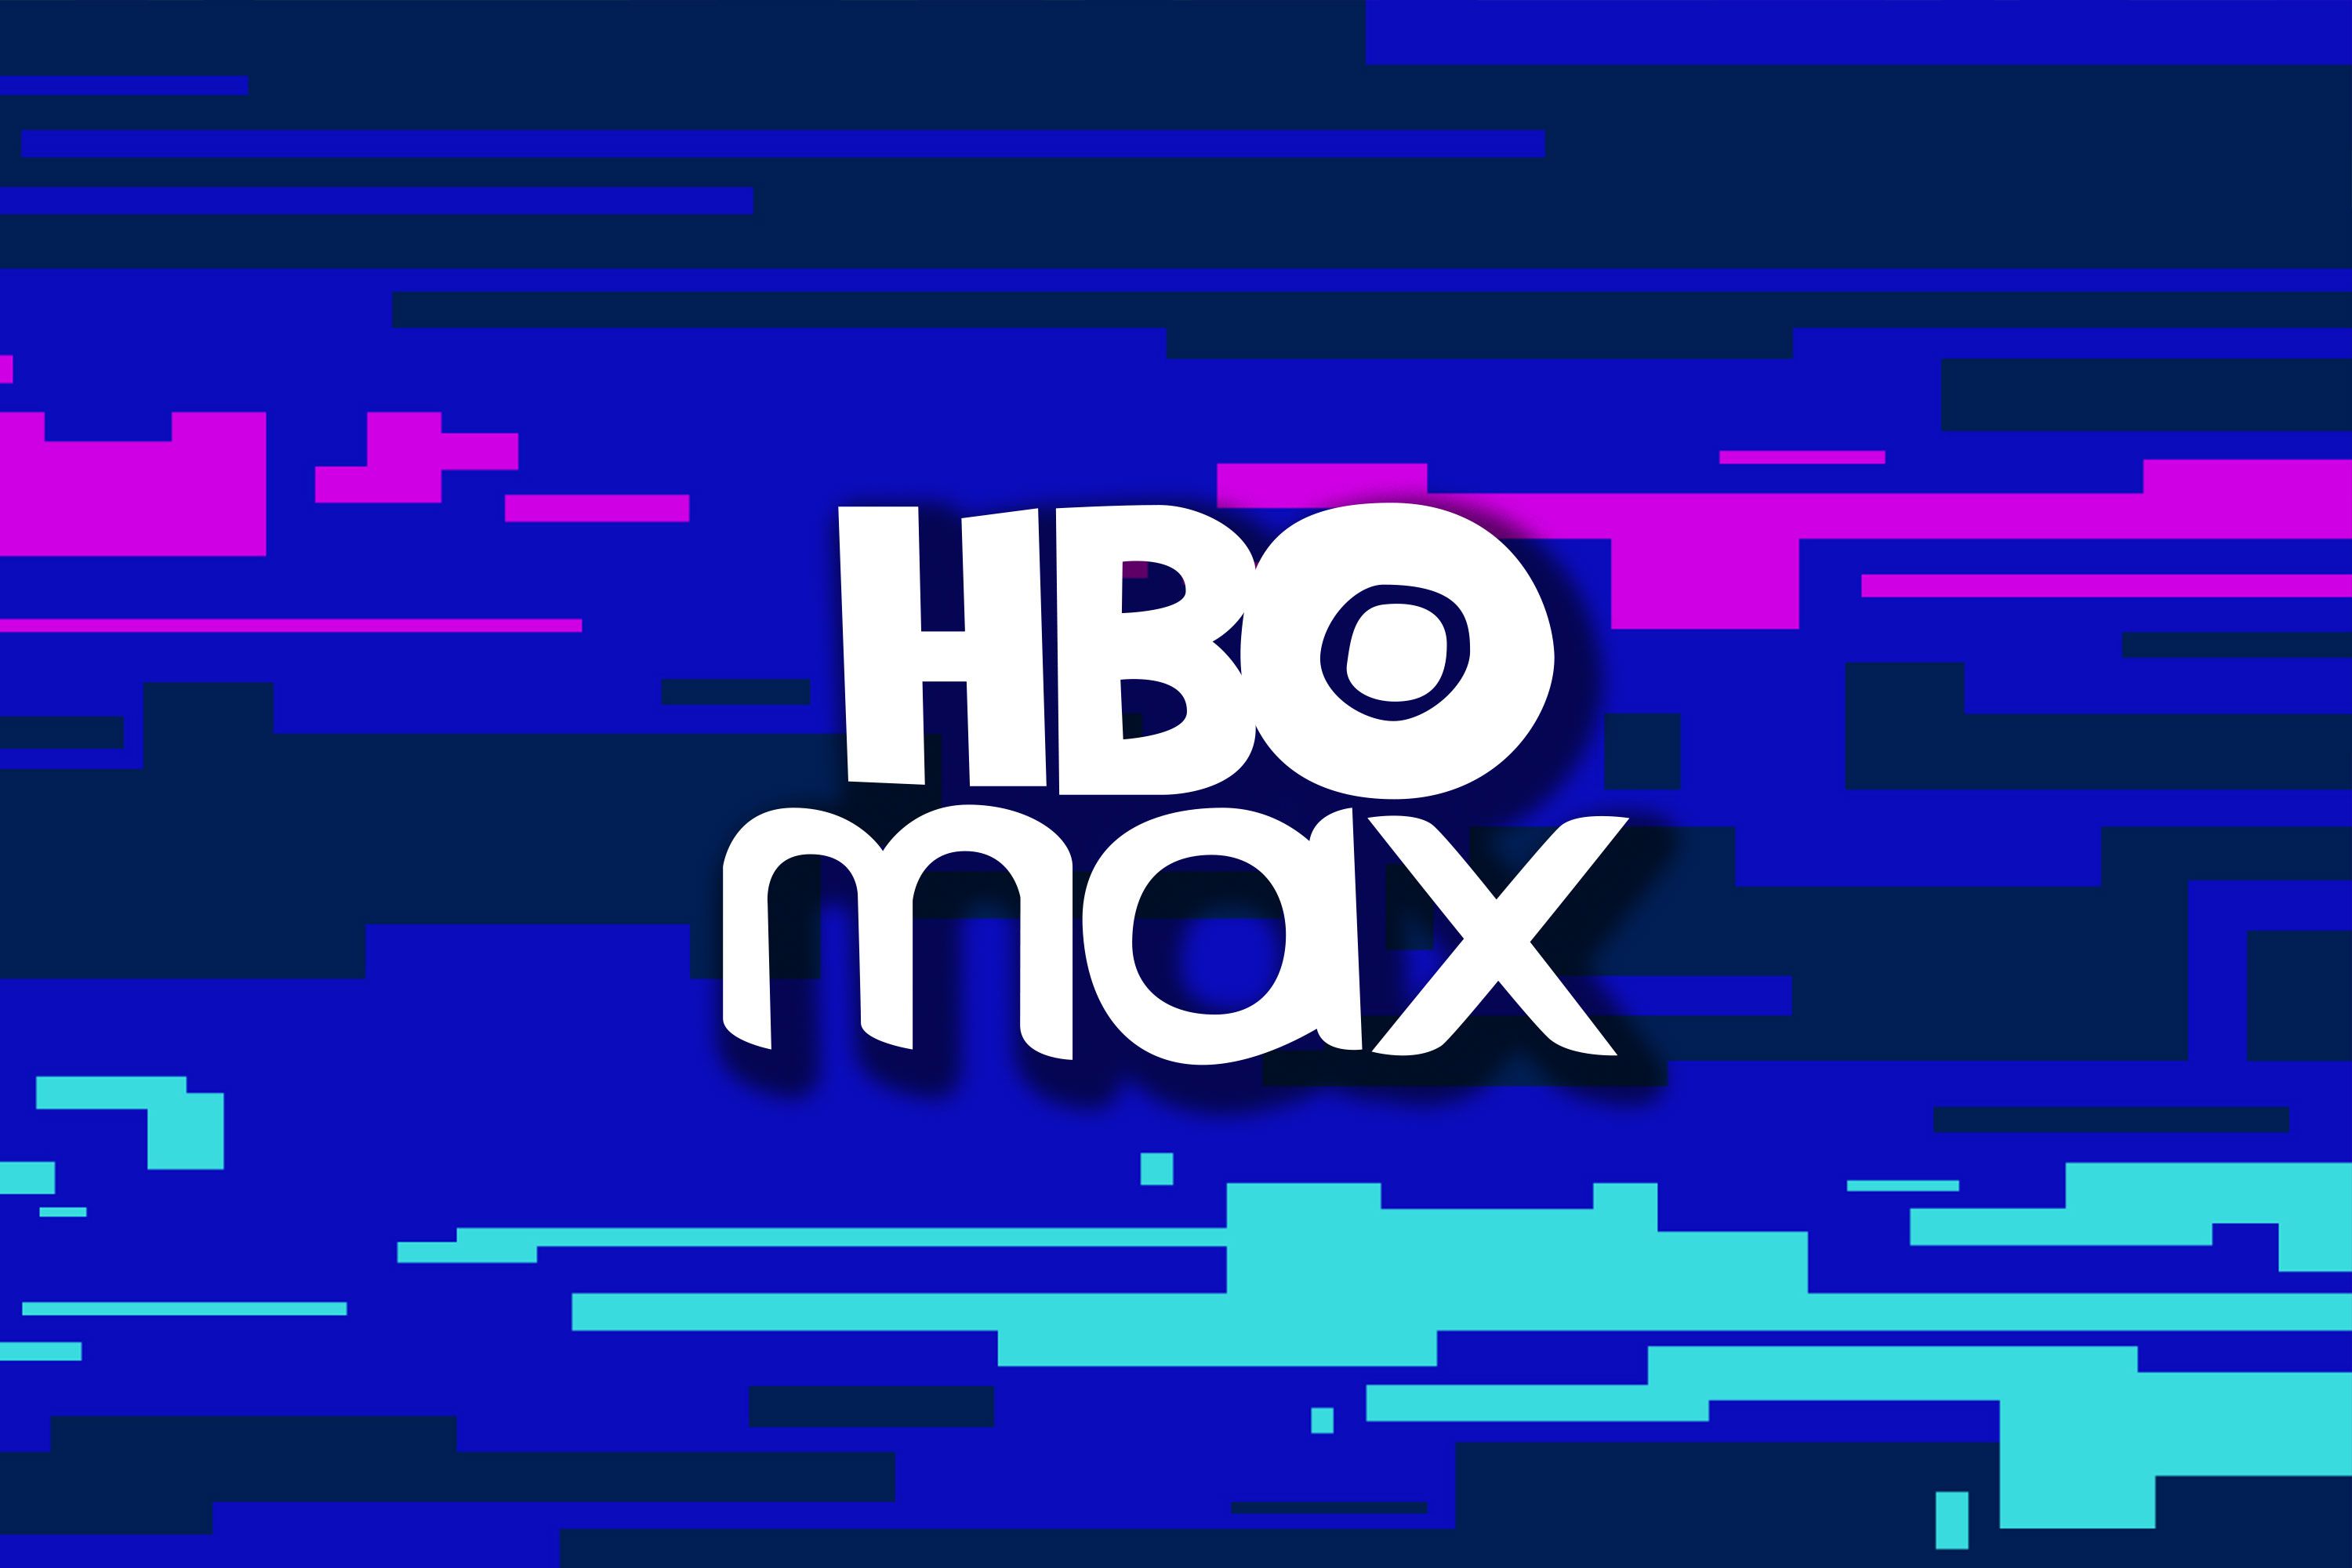 Quem Tem HBO Tem HBO Max